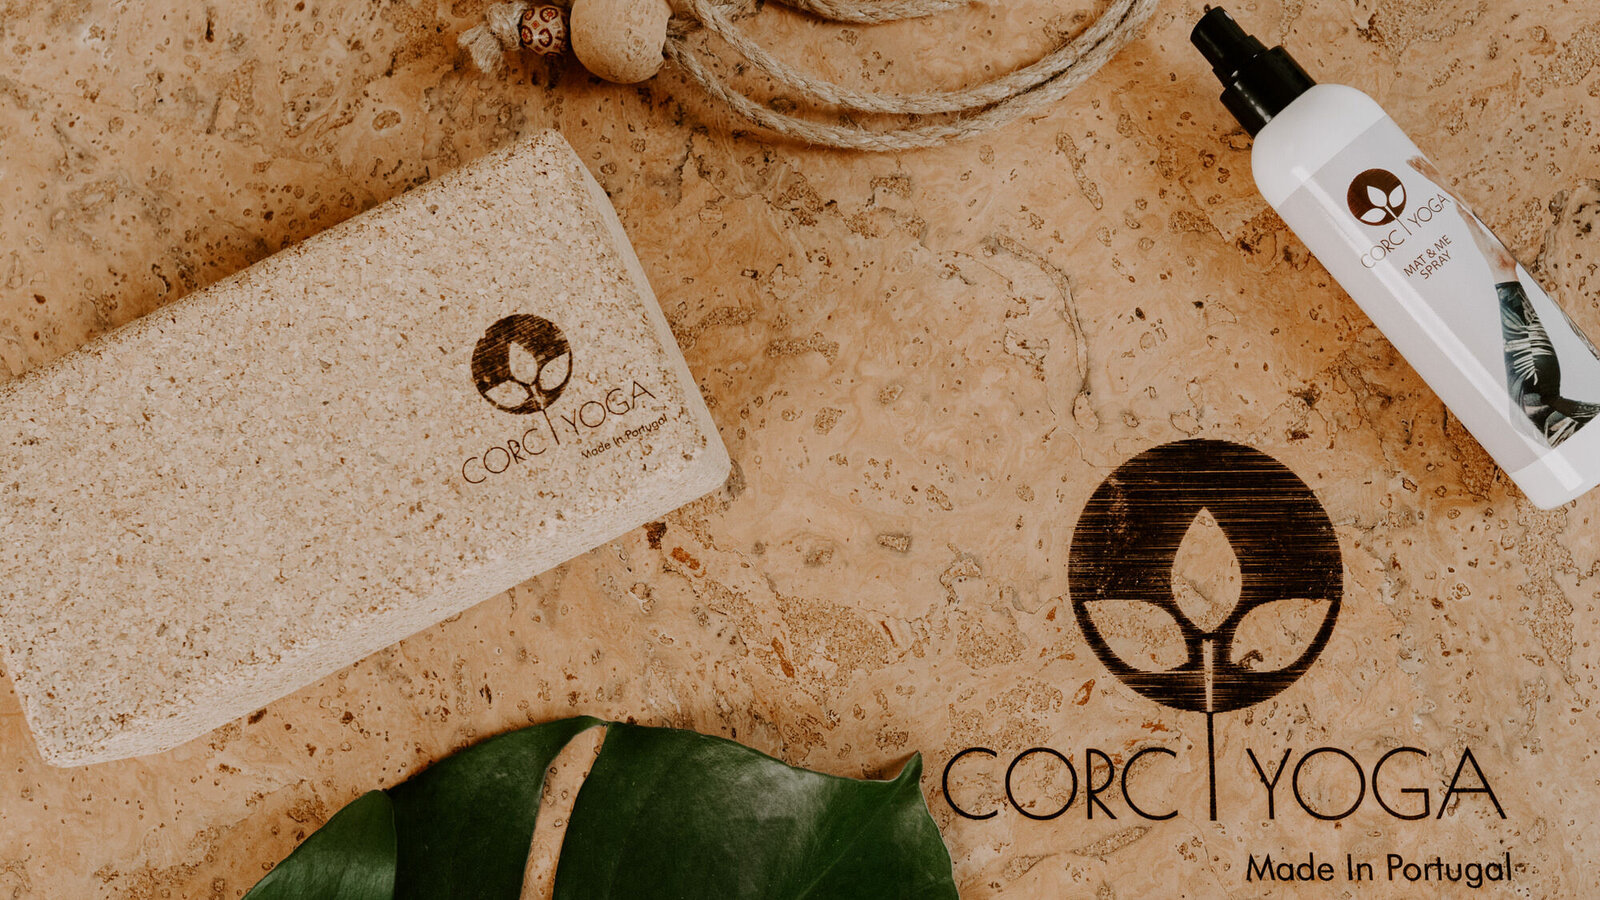 Corc Yoga Product-1-2